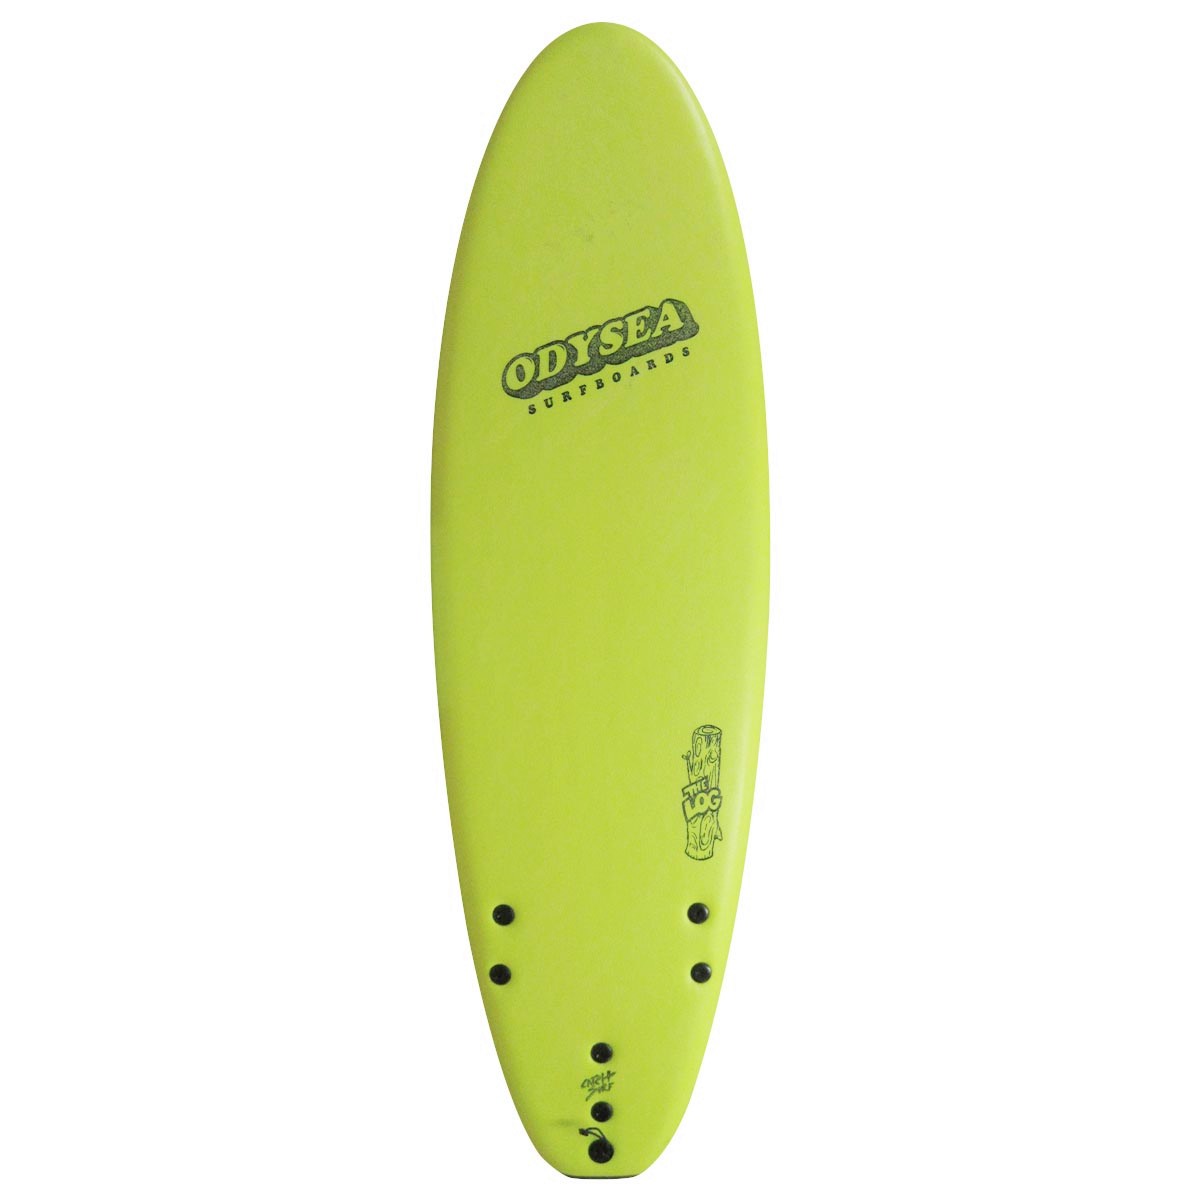 CATCH SURF / ODYSEA THE LOG 6`0